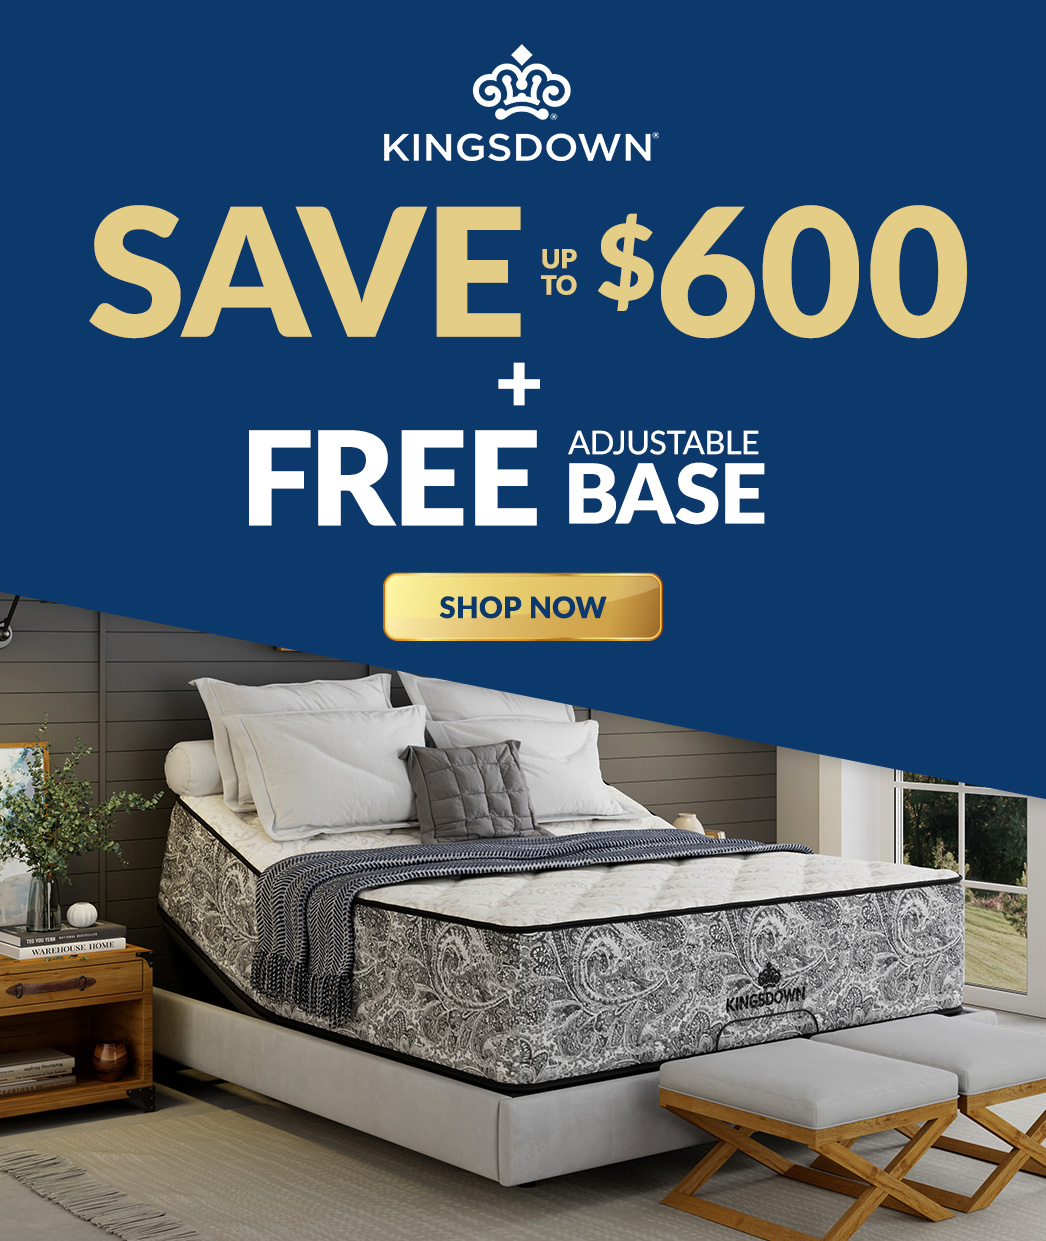 Kingsdown save up to $600 plus Free Adjustable Base